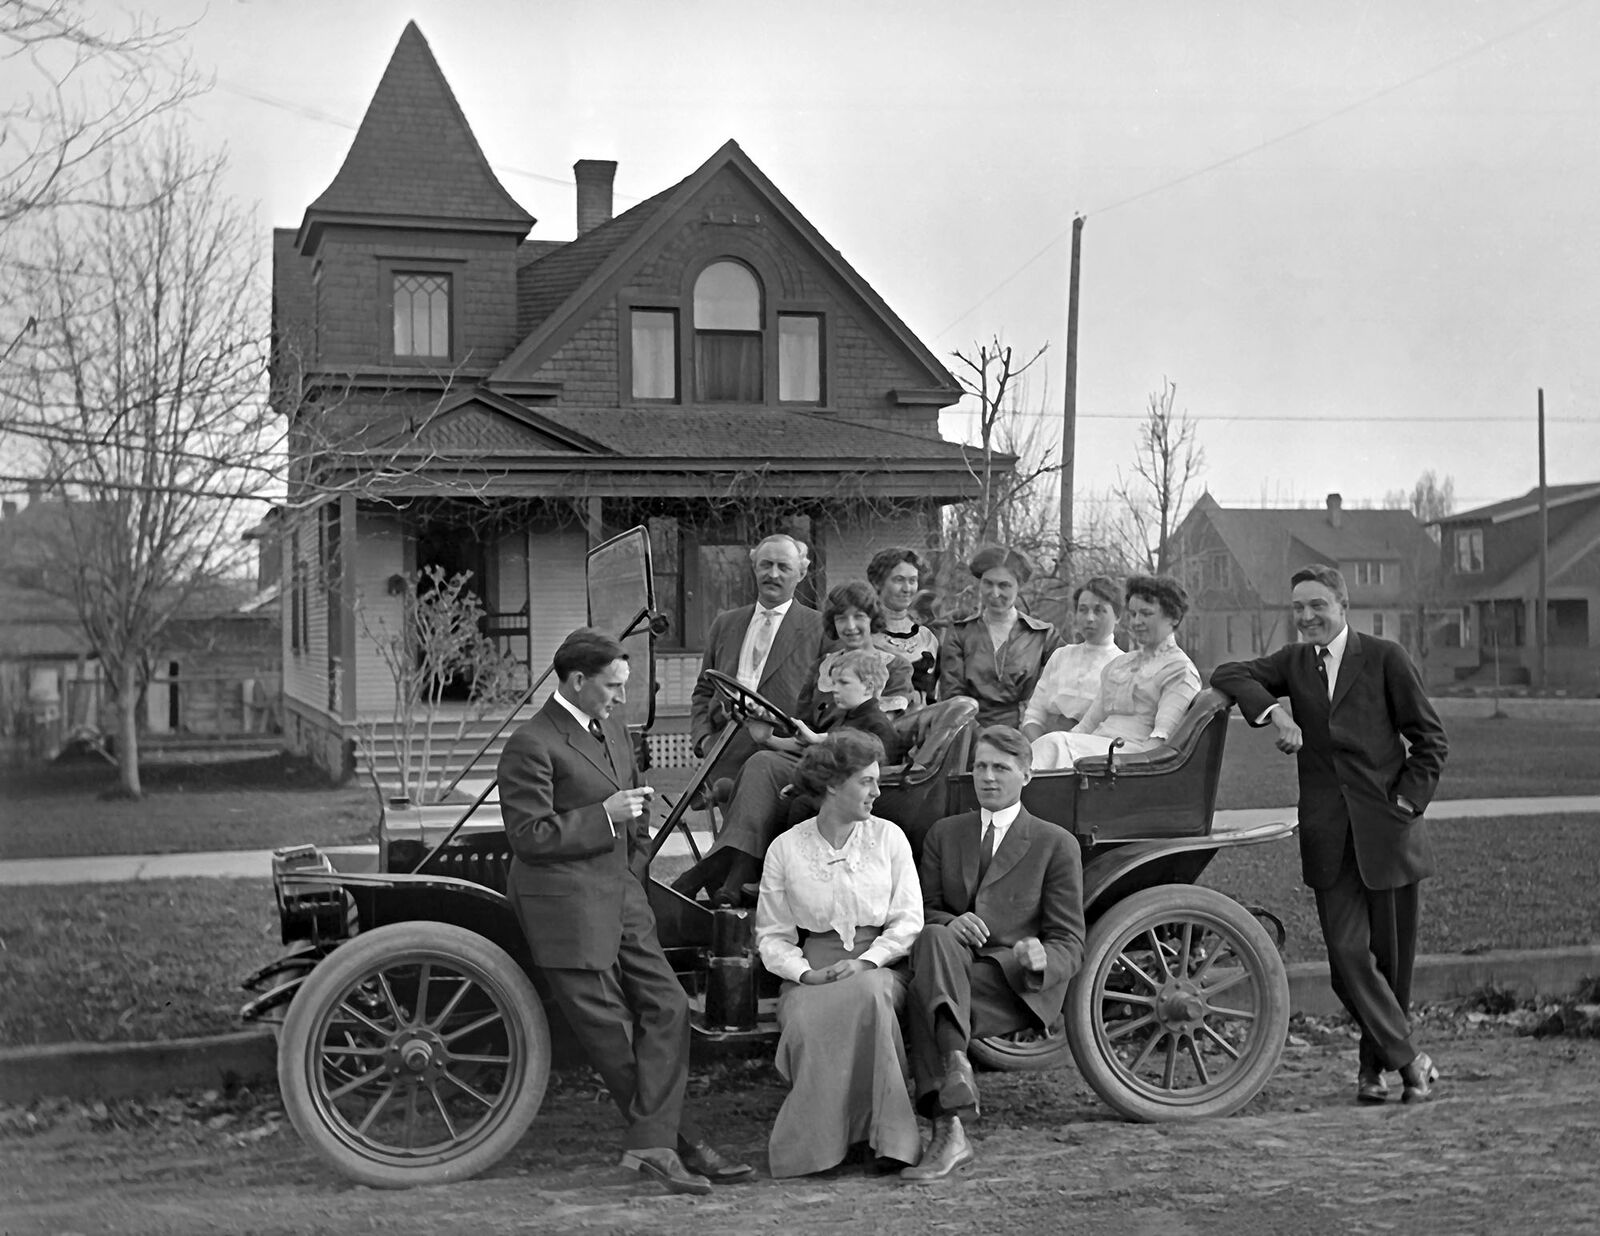 1913 Family Posing With Car, Spokane, WA Vintage Old Photo 8.5